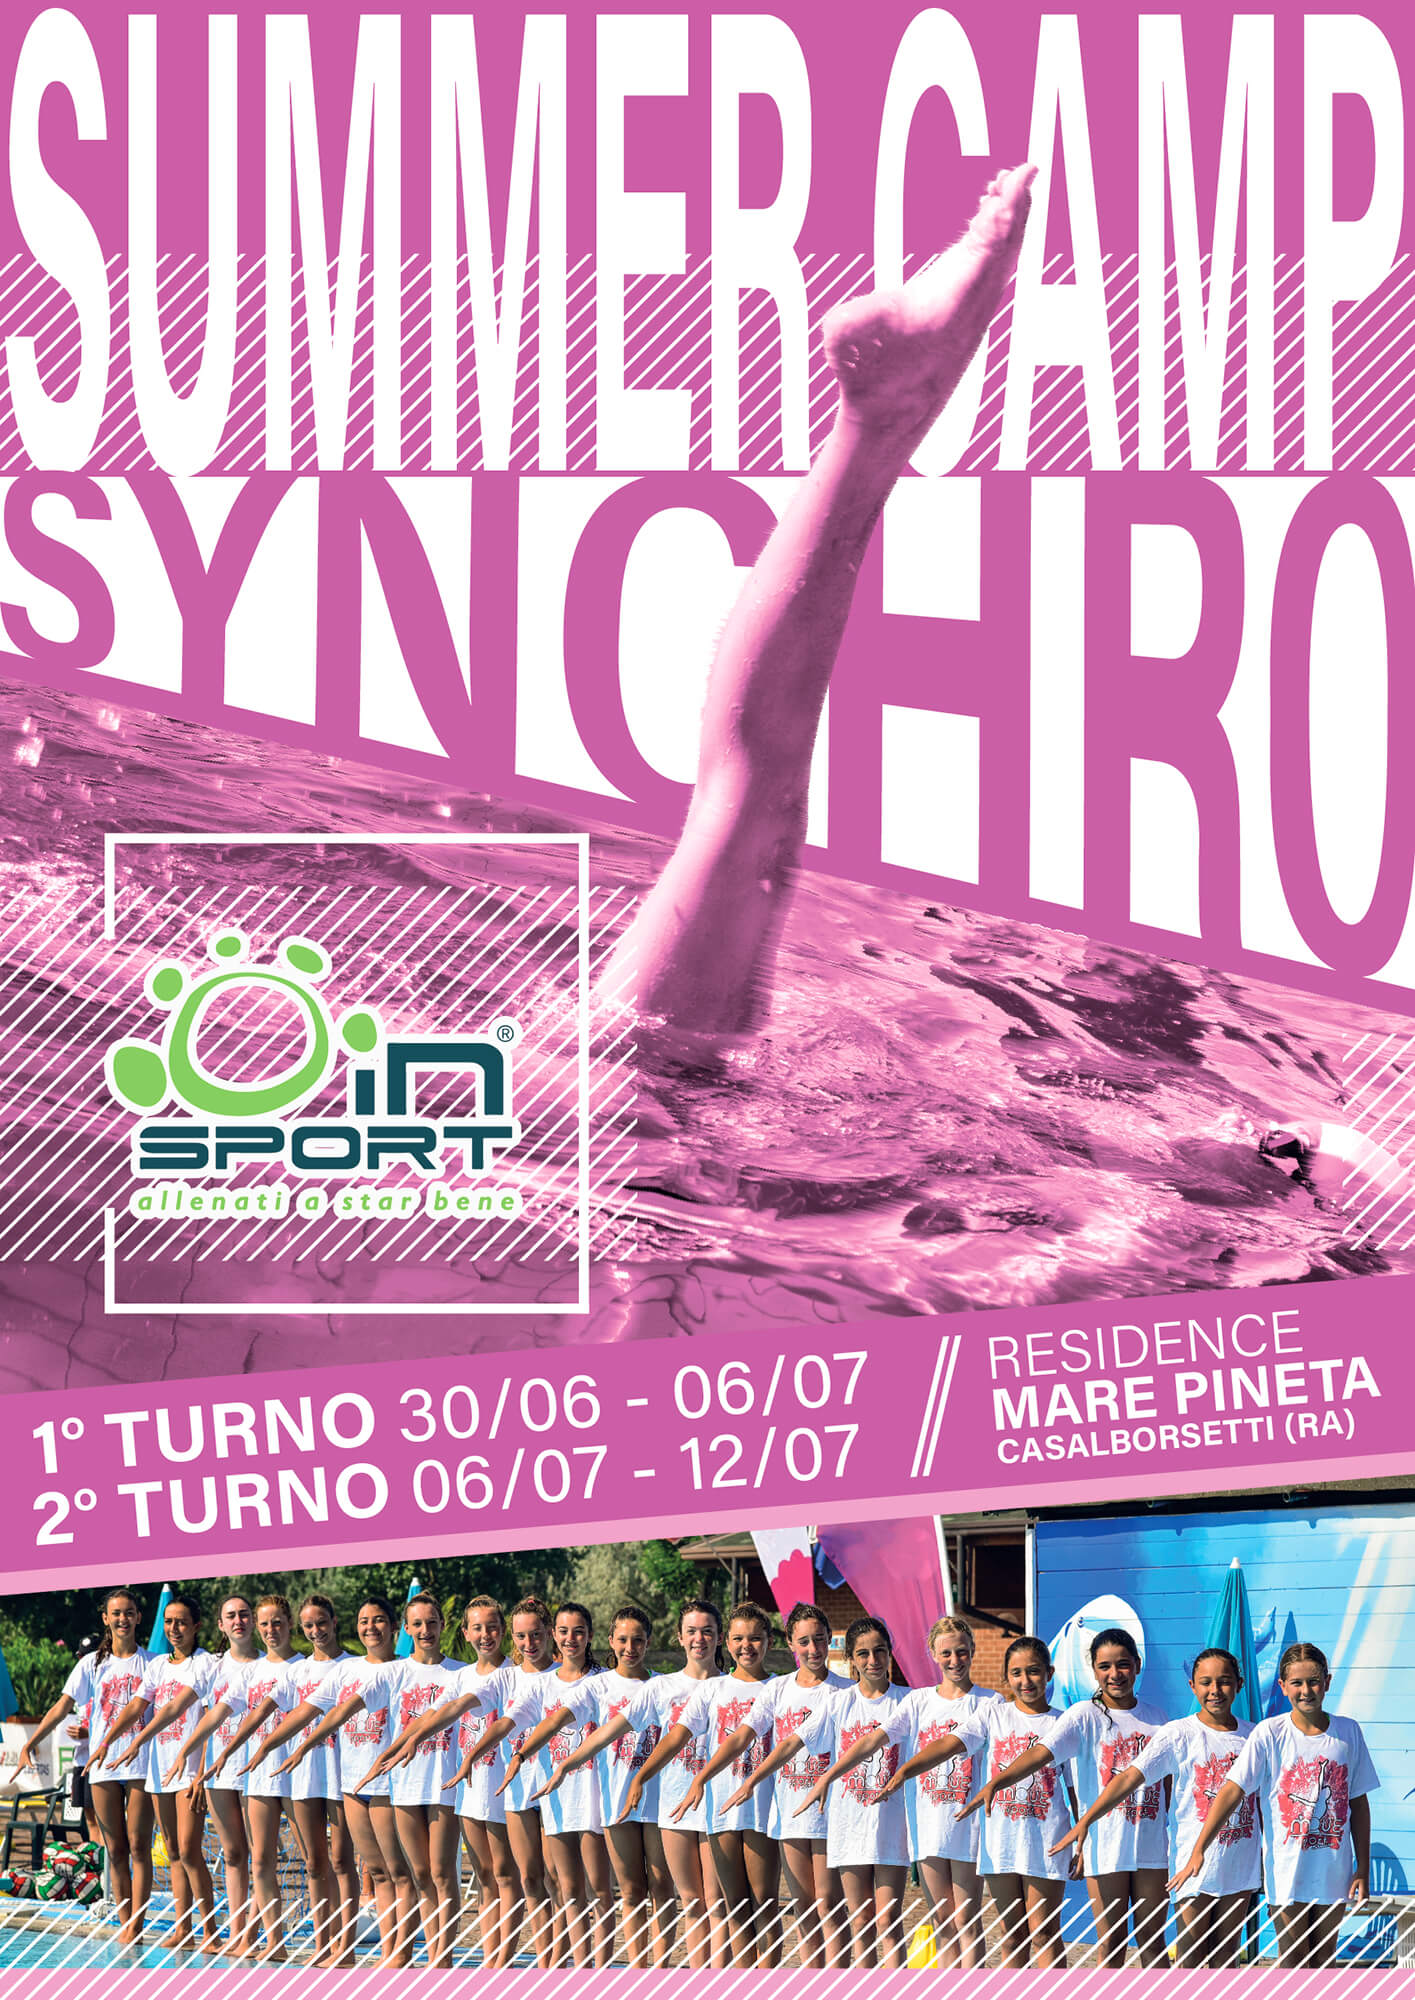 Summer Camp Ravenna sincro 2019